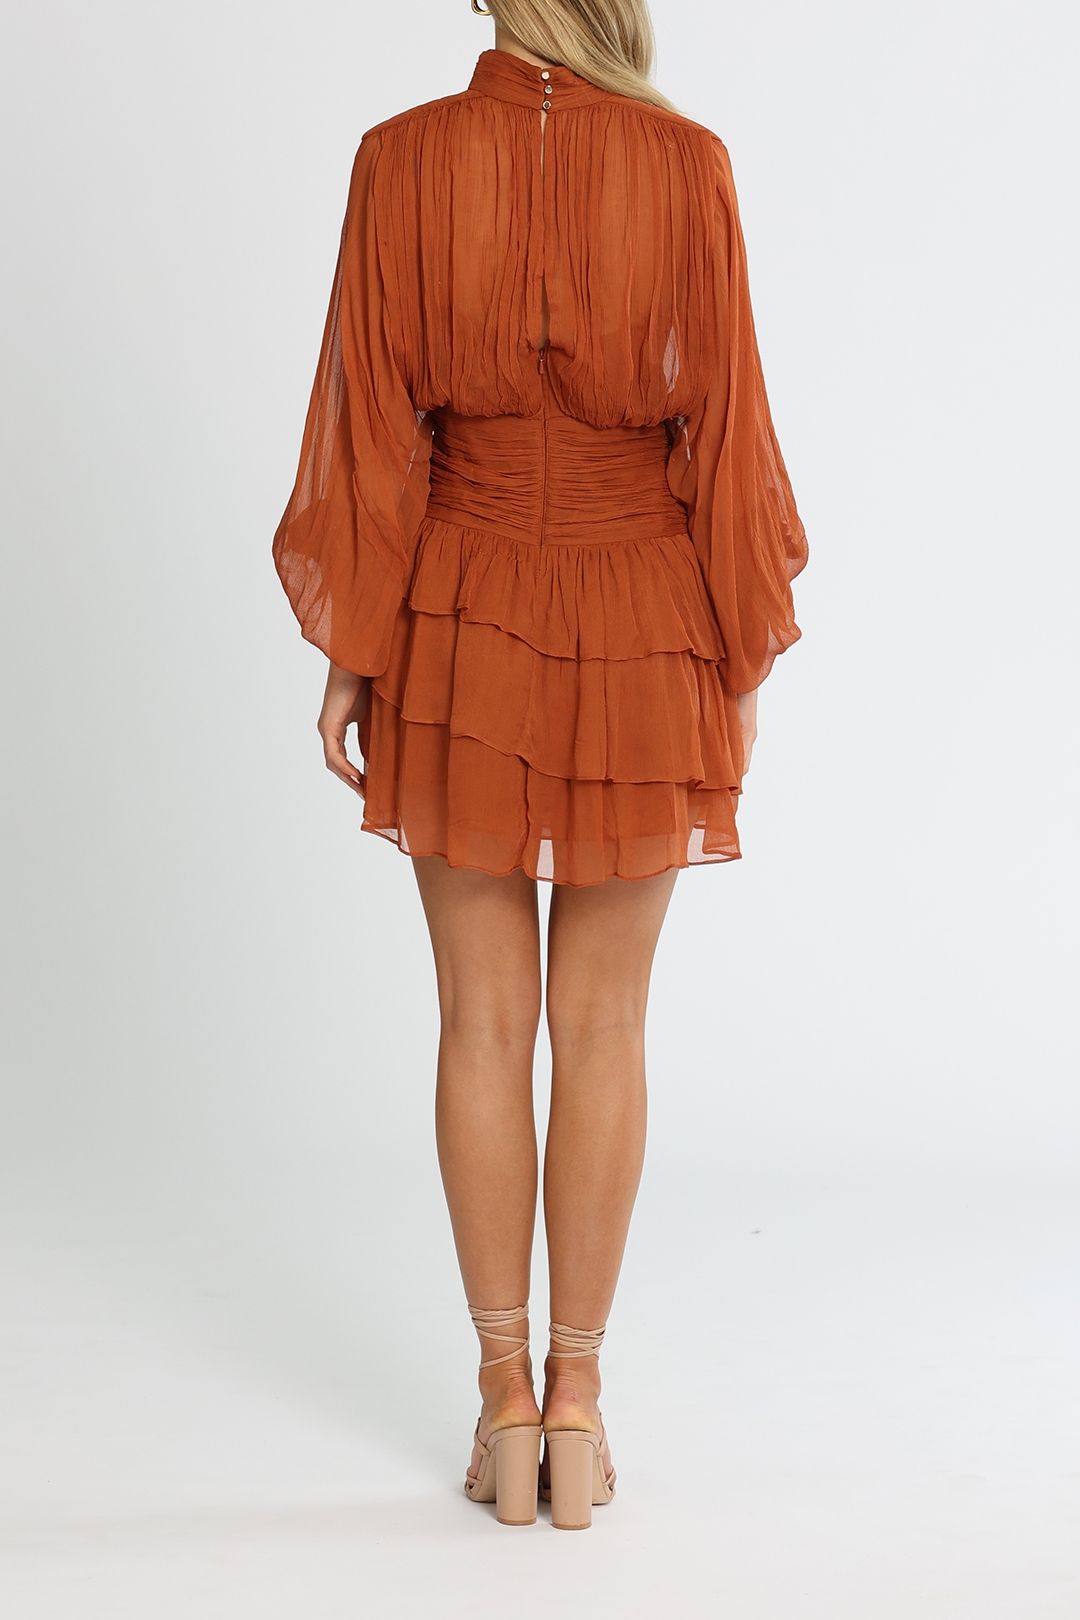 Shona Joy Noemi Long Sleeve Ruched Mini Dress Siena Sheer